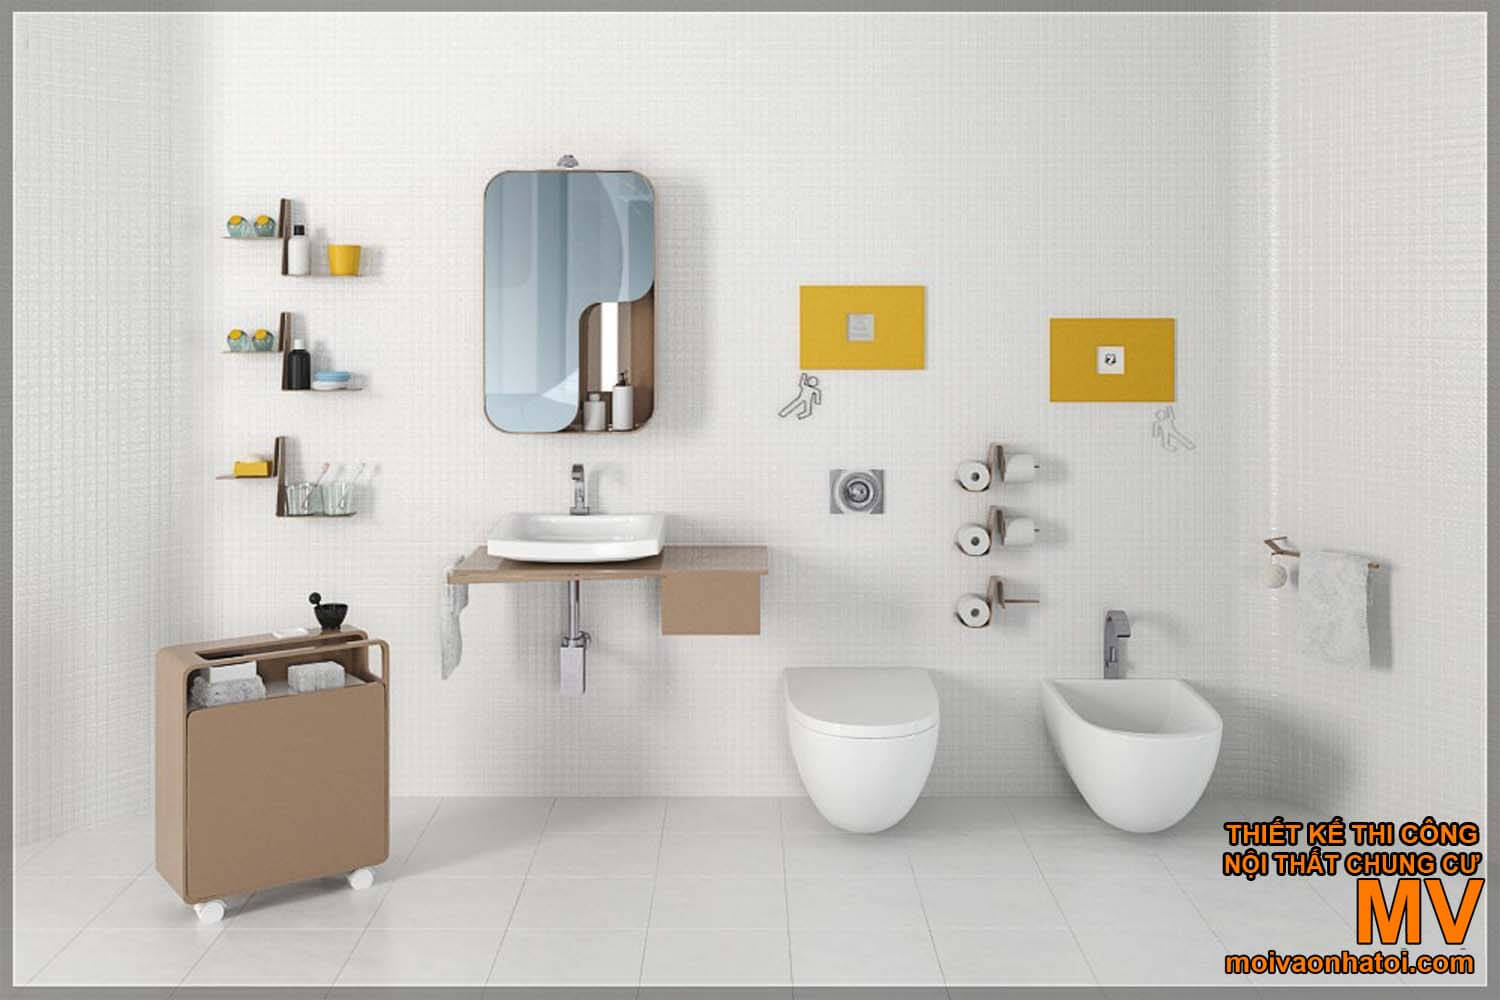 lavabo wash face, beautiful modern bathroom design